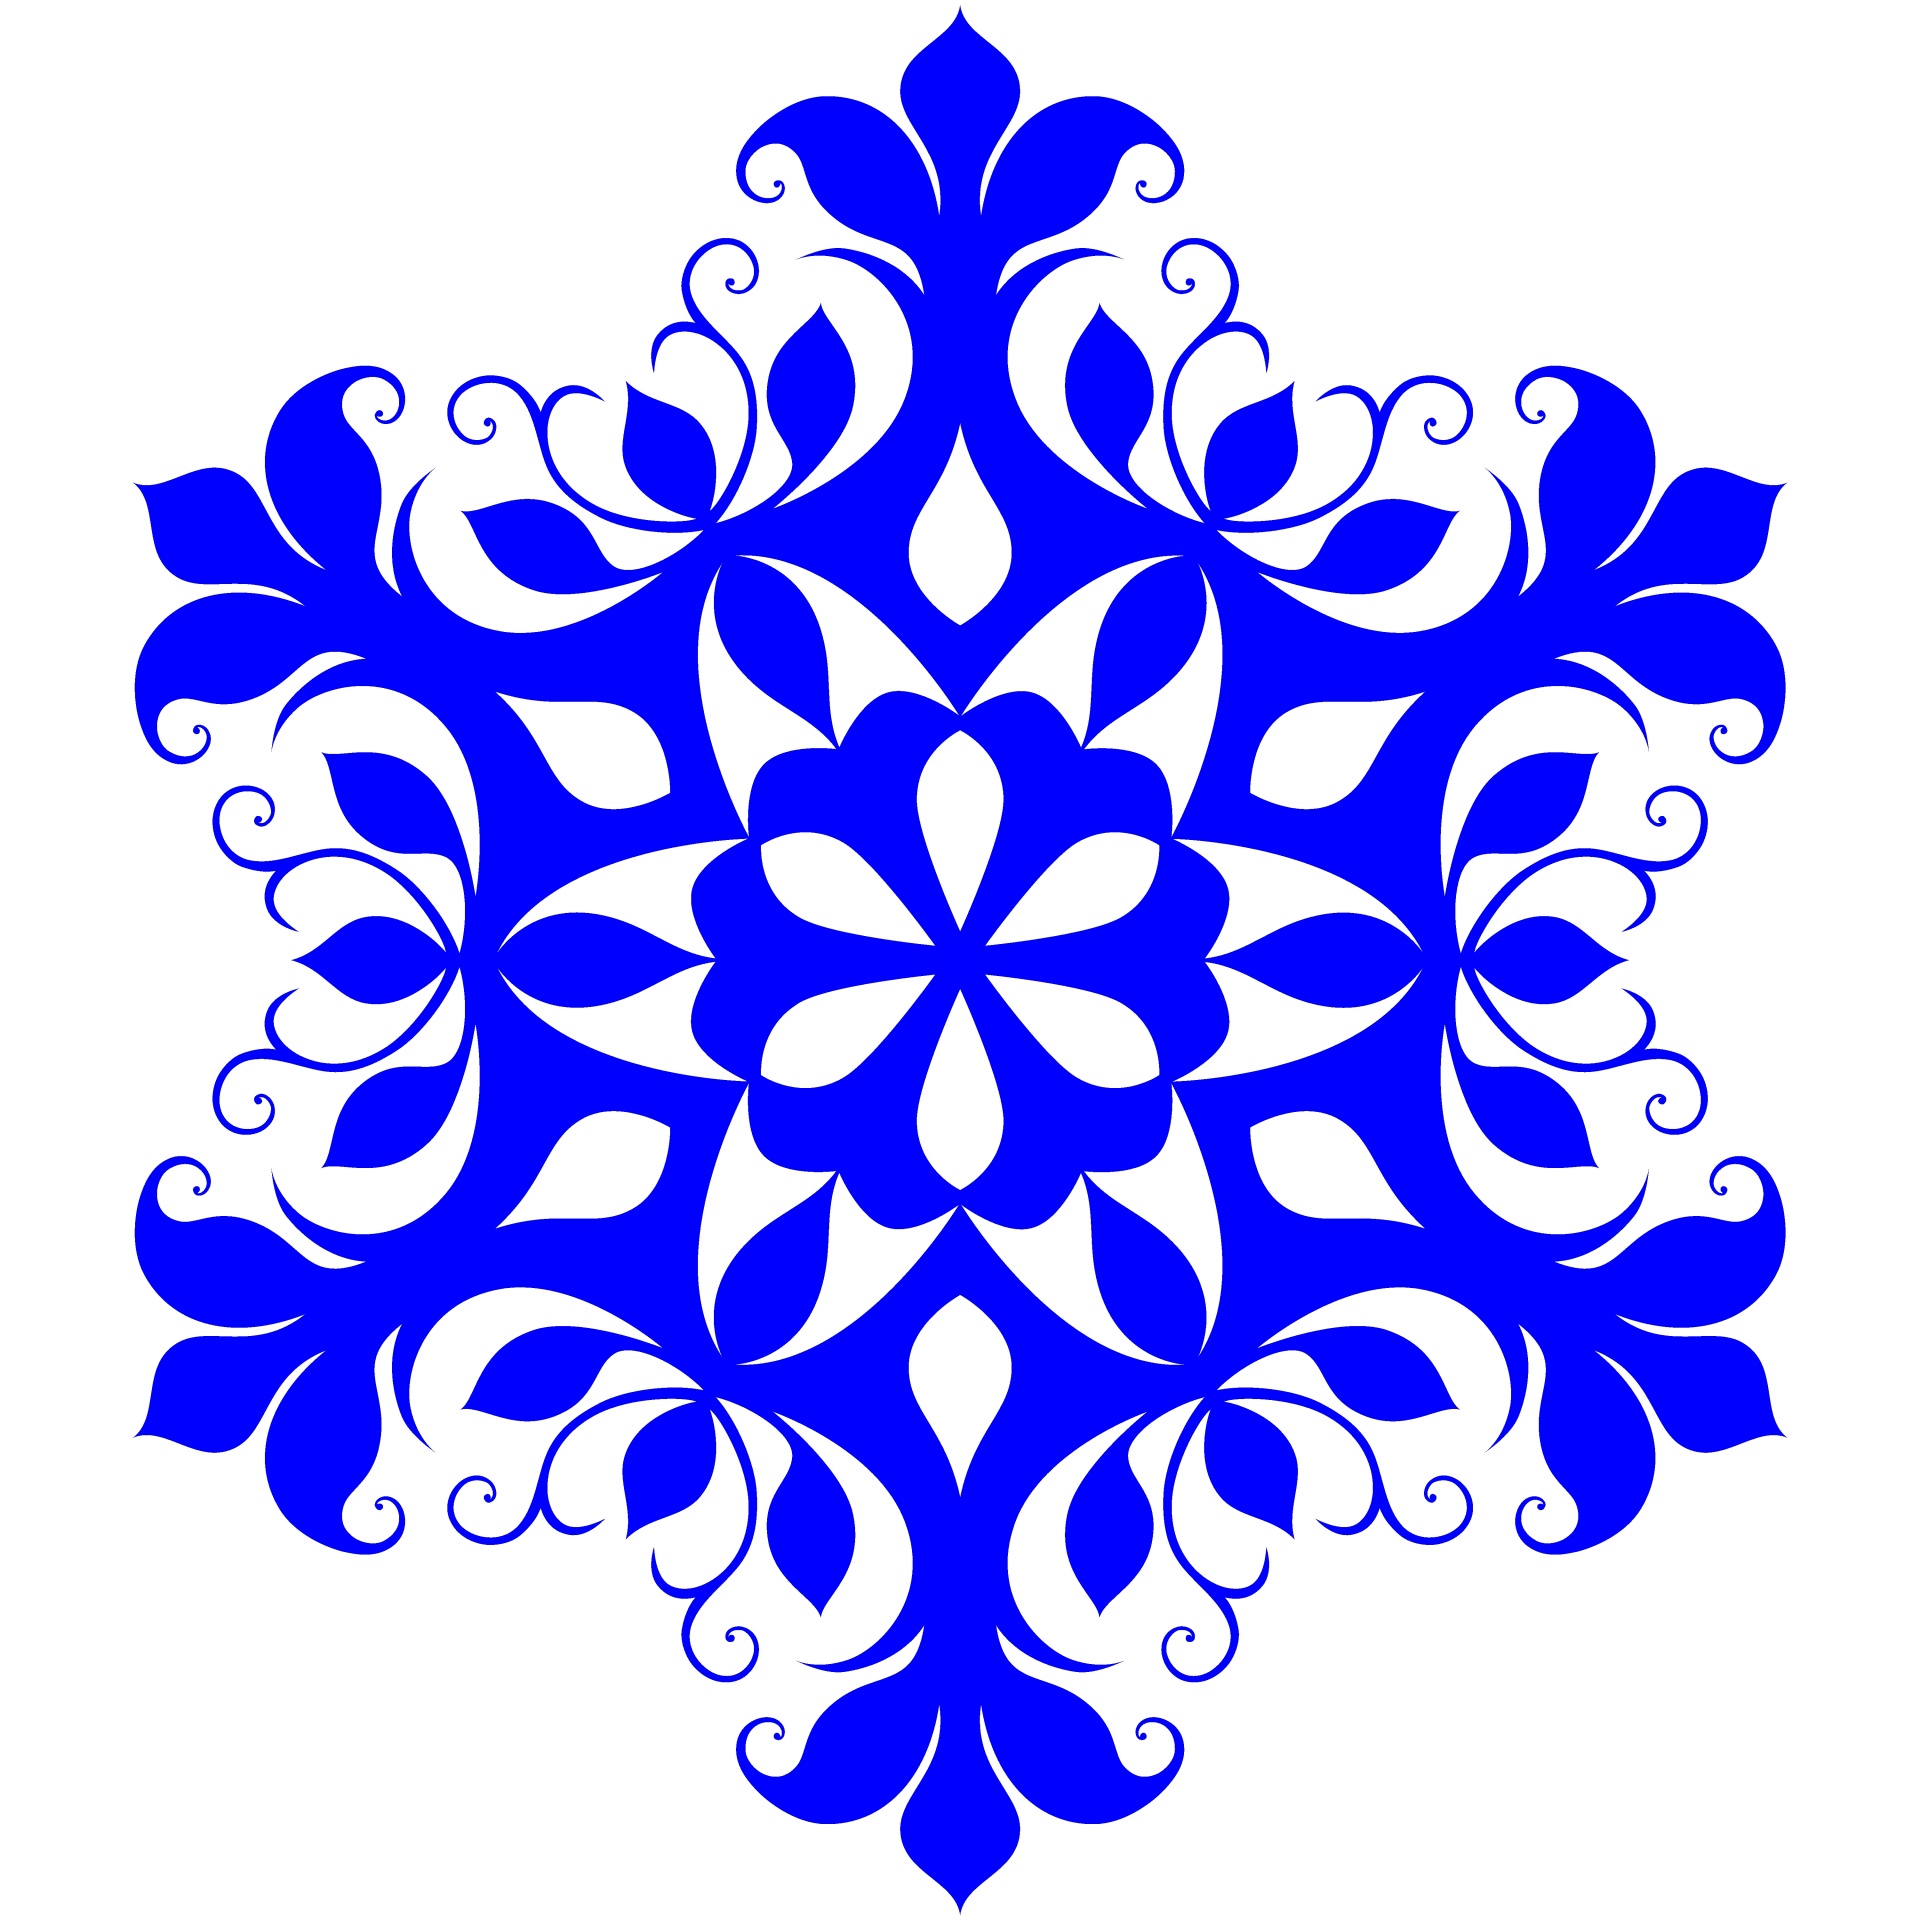 Blauwe sneeuwvlok